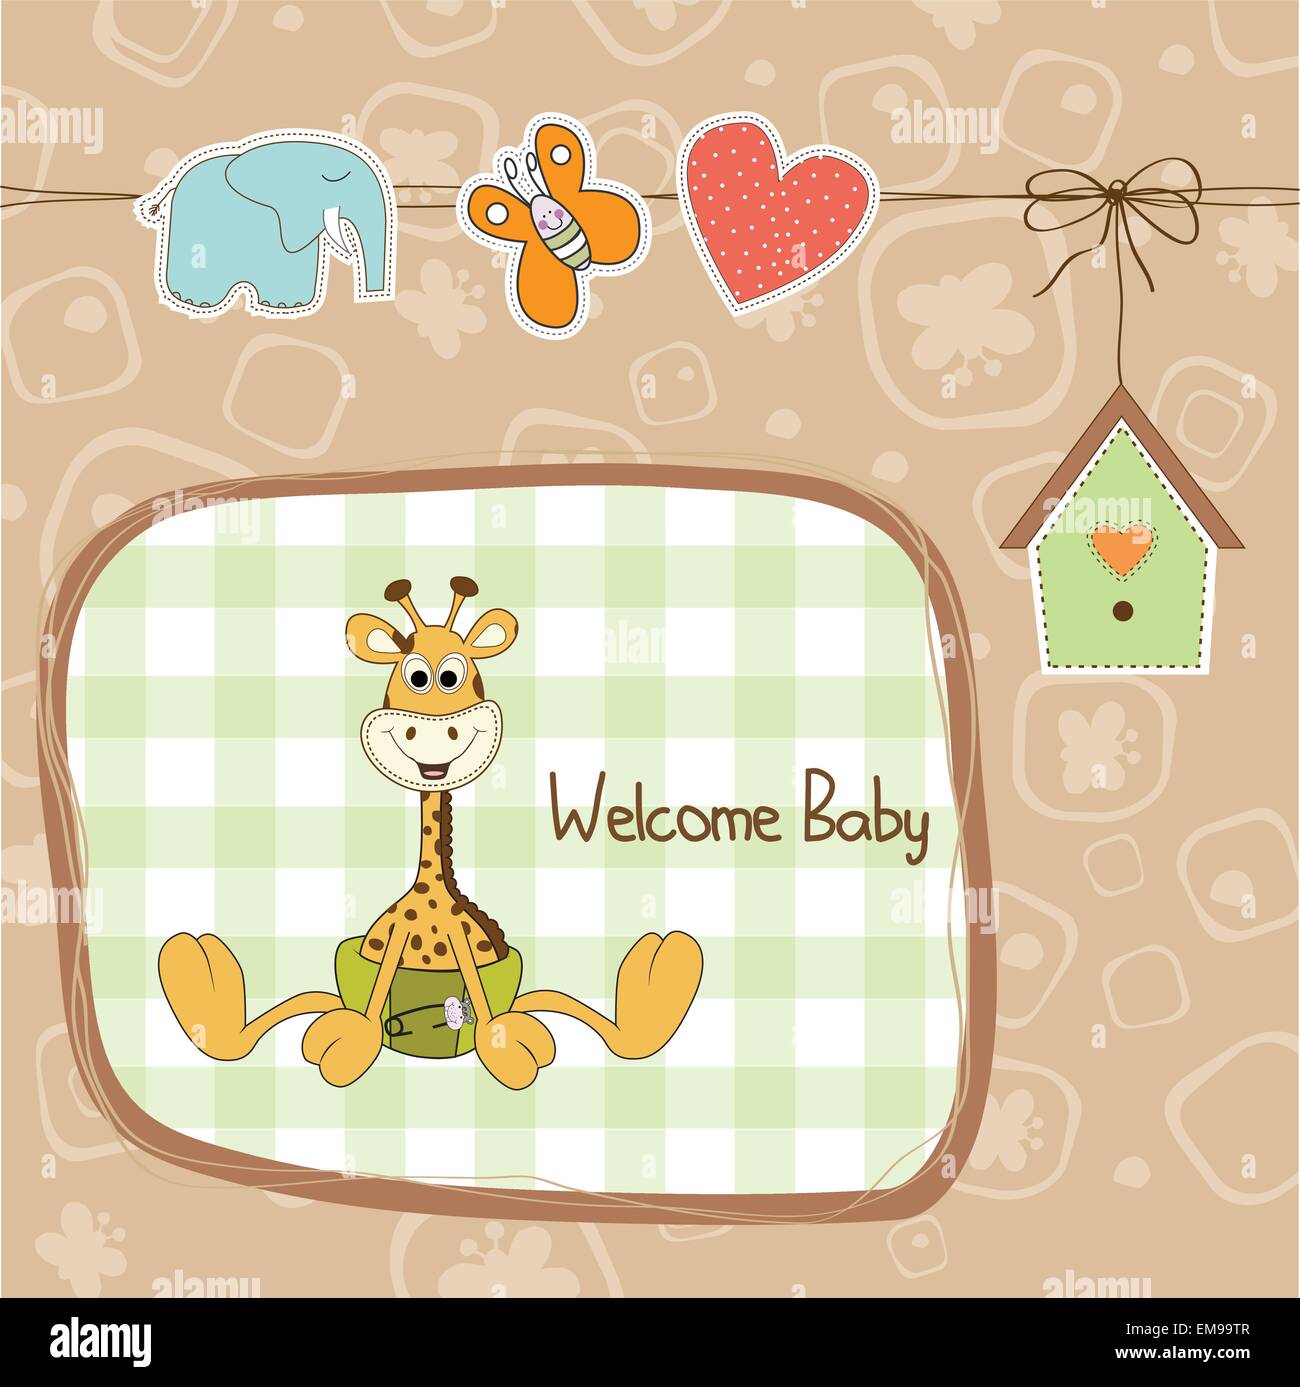 baby shower card with baby giraffe Stock Vector